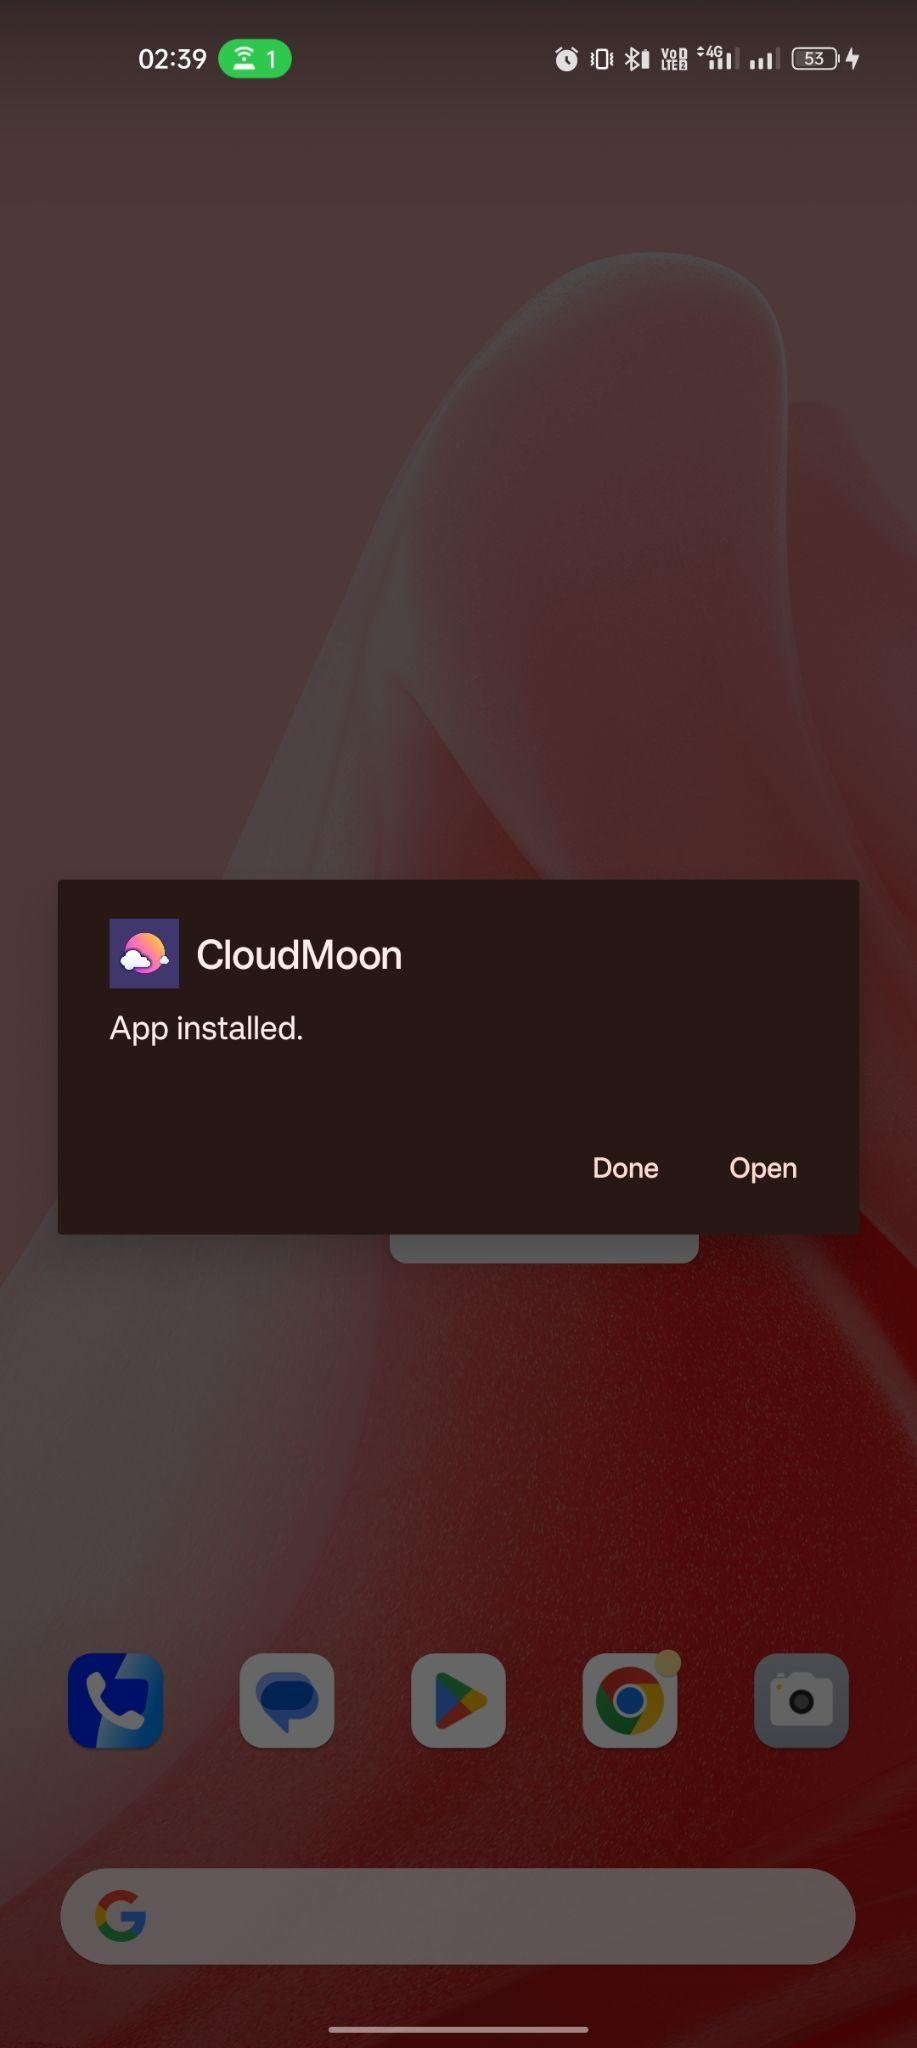 CloudMoon apk installed